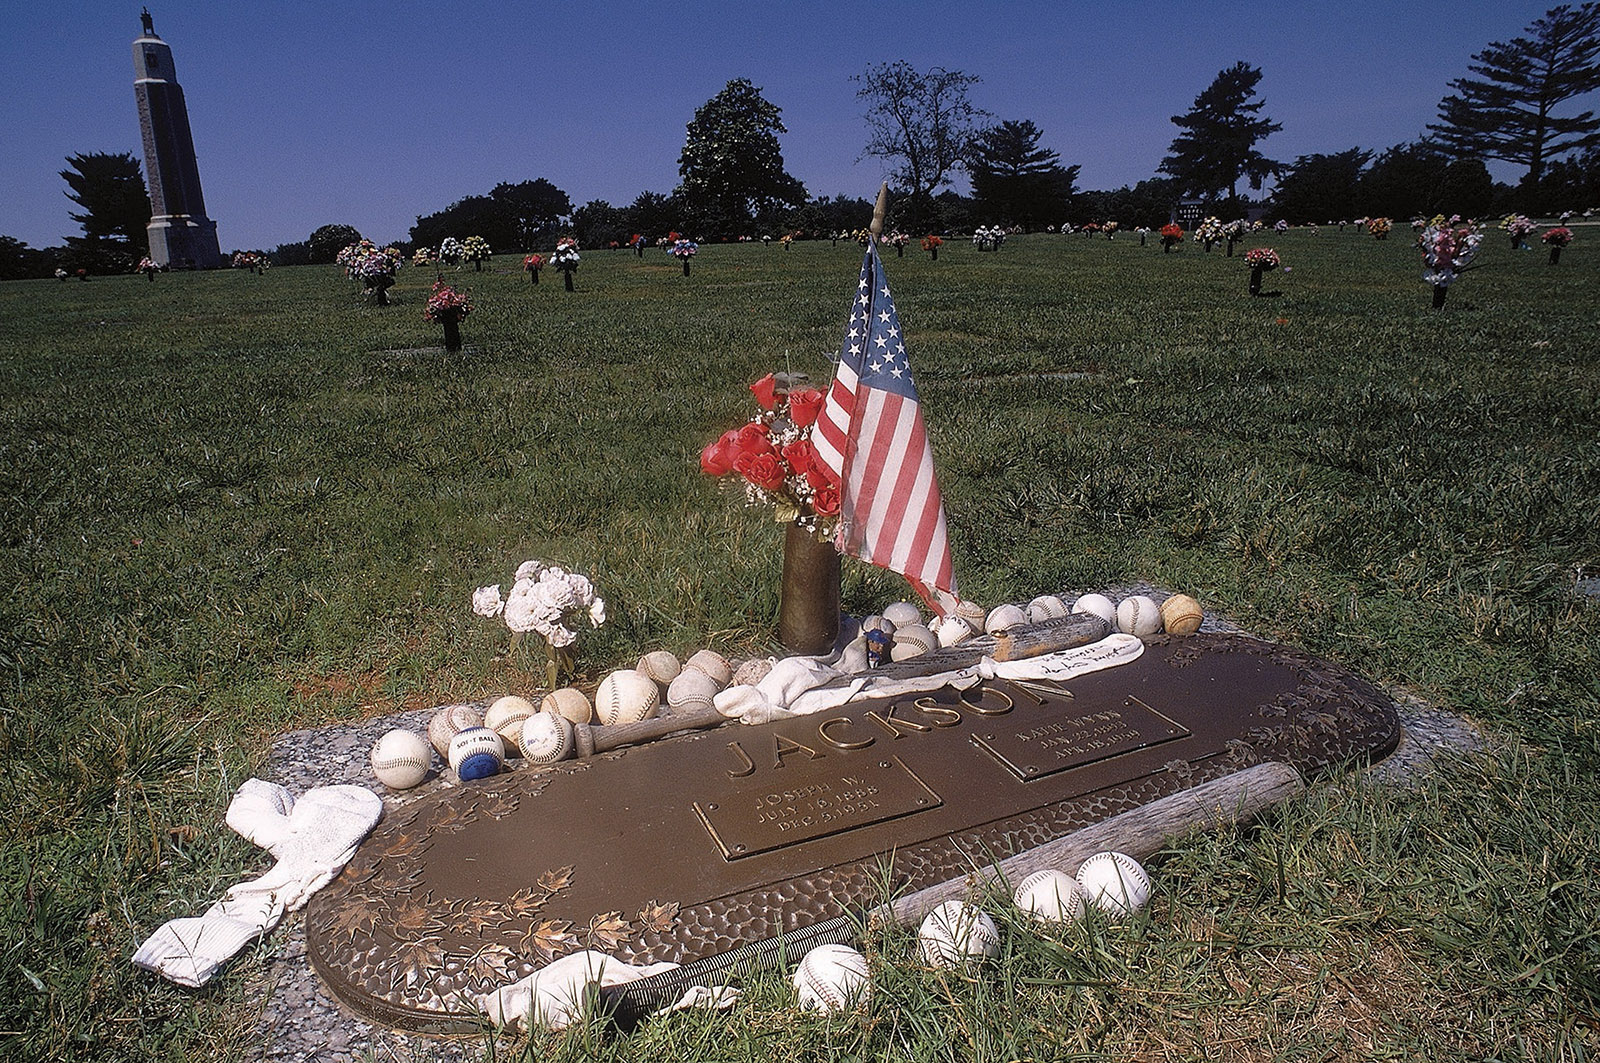 Fans’ mementos adorning the grave of Chicago White Sox player “Shoeless” Joe Jackson at Woodlawn Memorial Park, Greenville, South Carolina, 2003